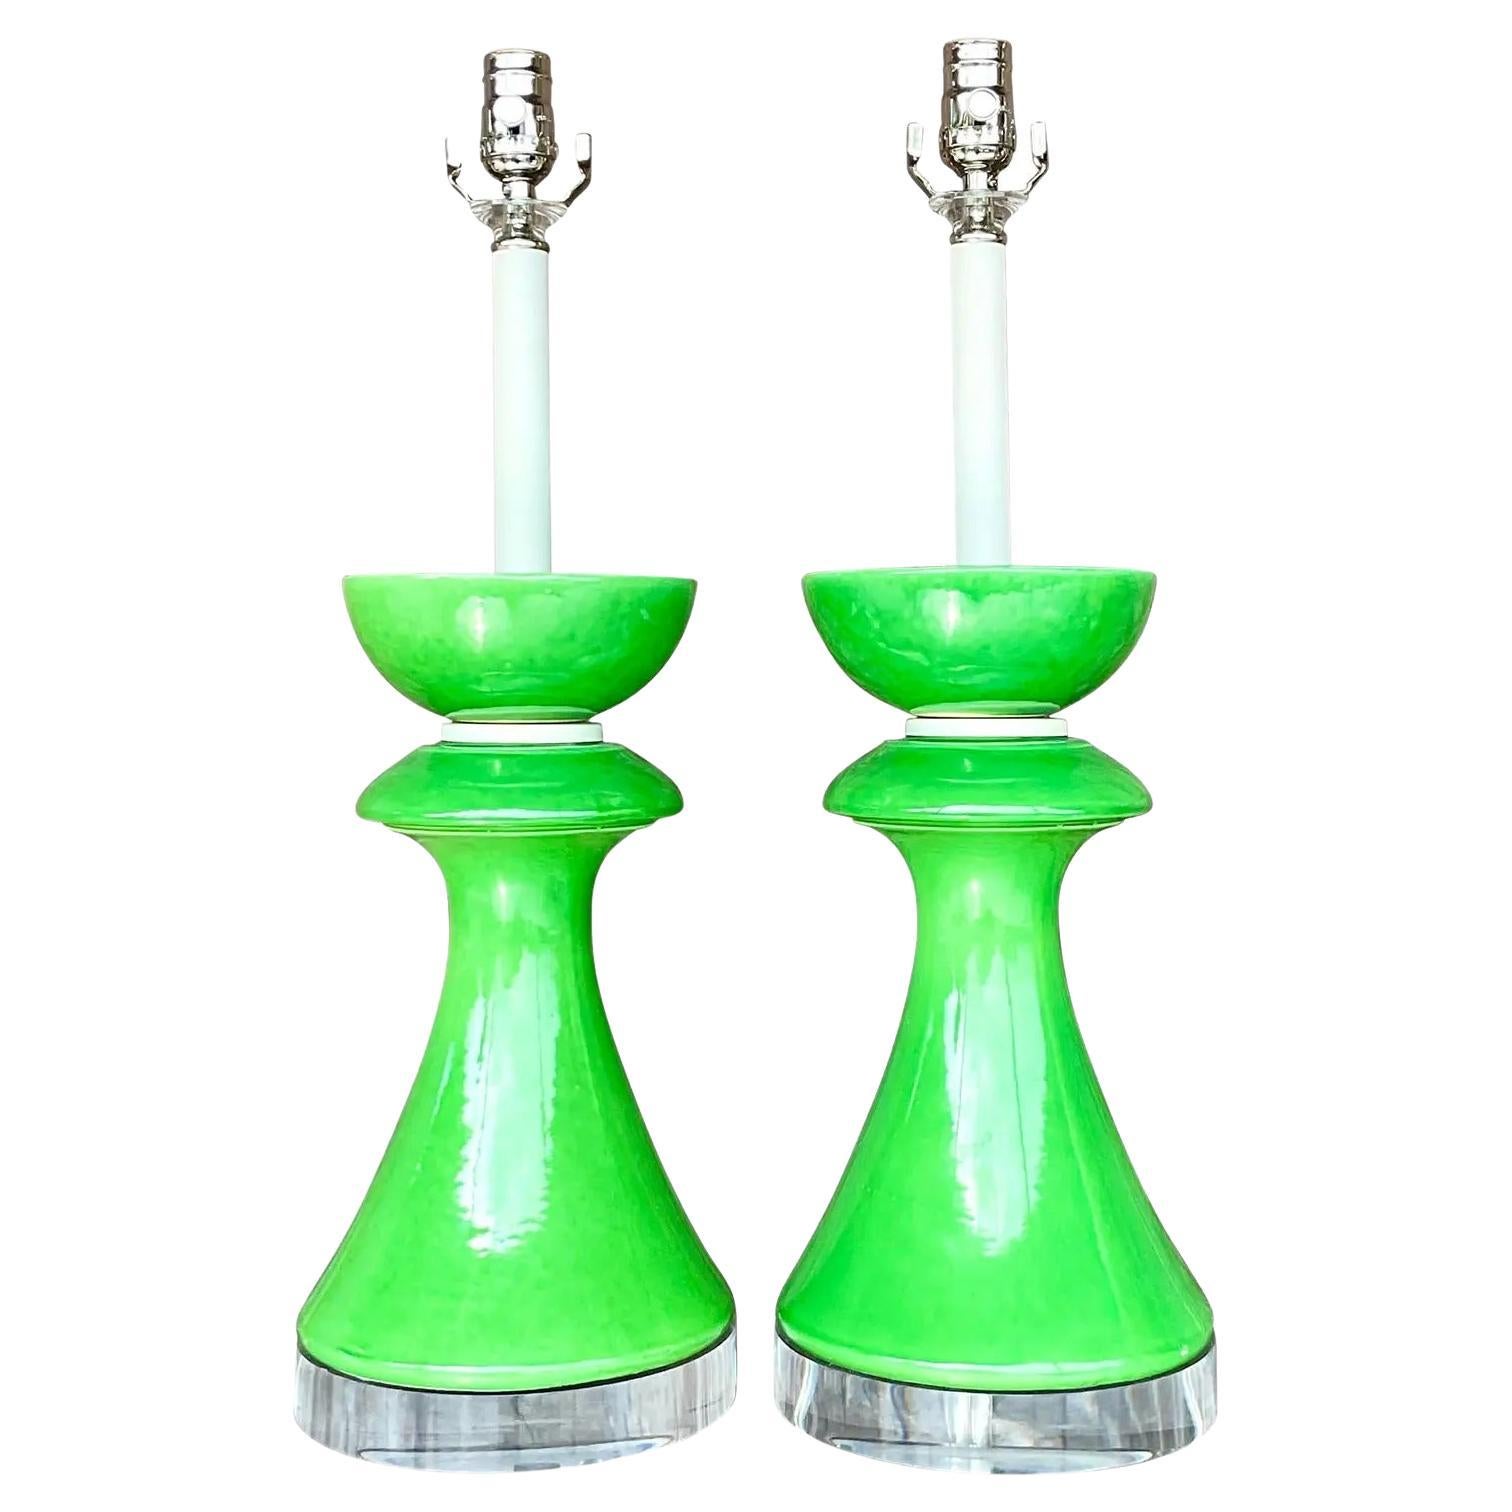 Vintage Postmodern Green Glazed Ceramic Table Lamps, Pair